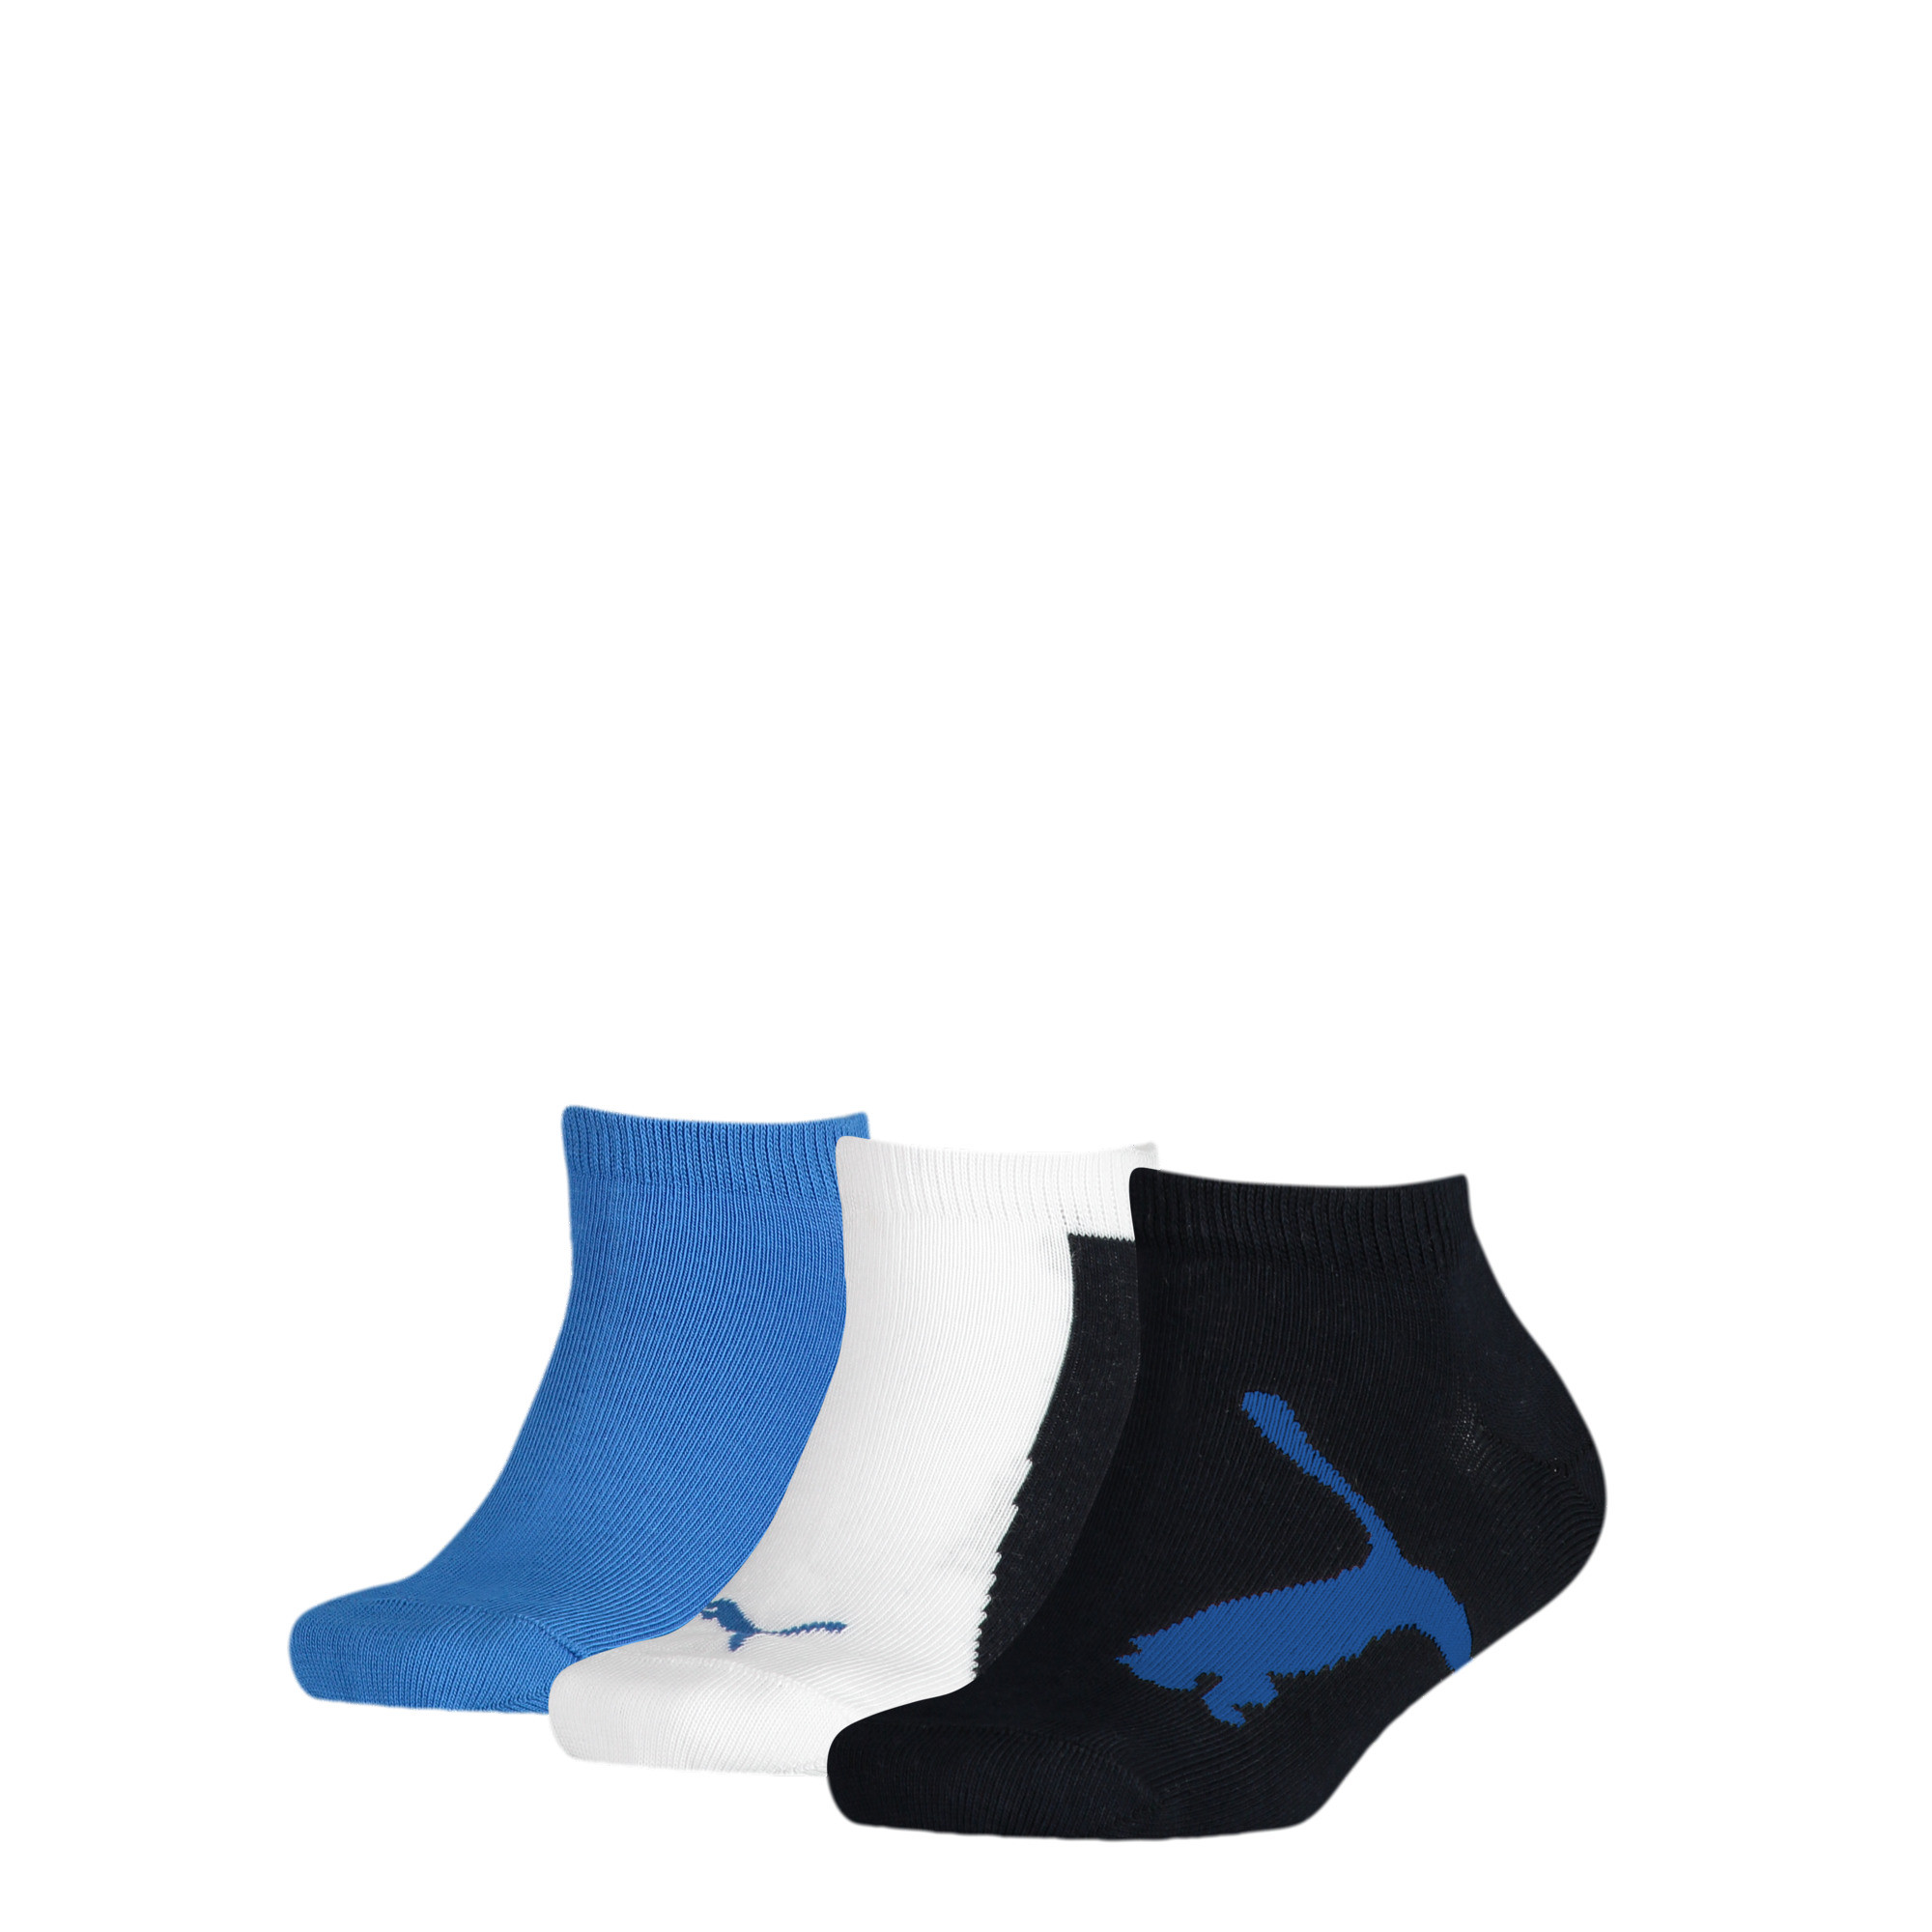 Kids' PUMA BWT Sneaker - Trainer Socks 3 Pack In Navy/White/Strong Blue, Size 27-30